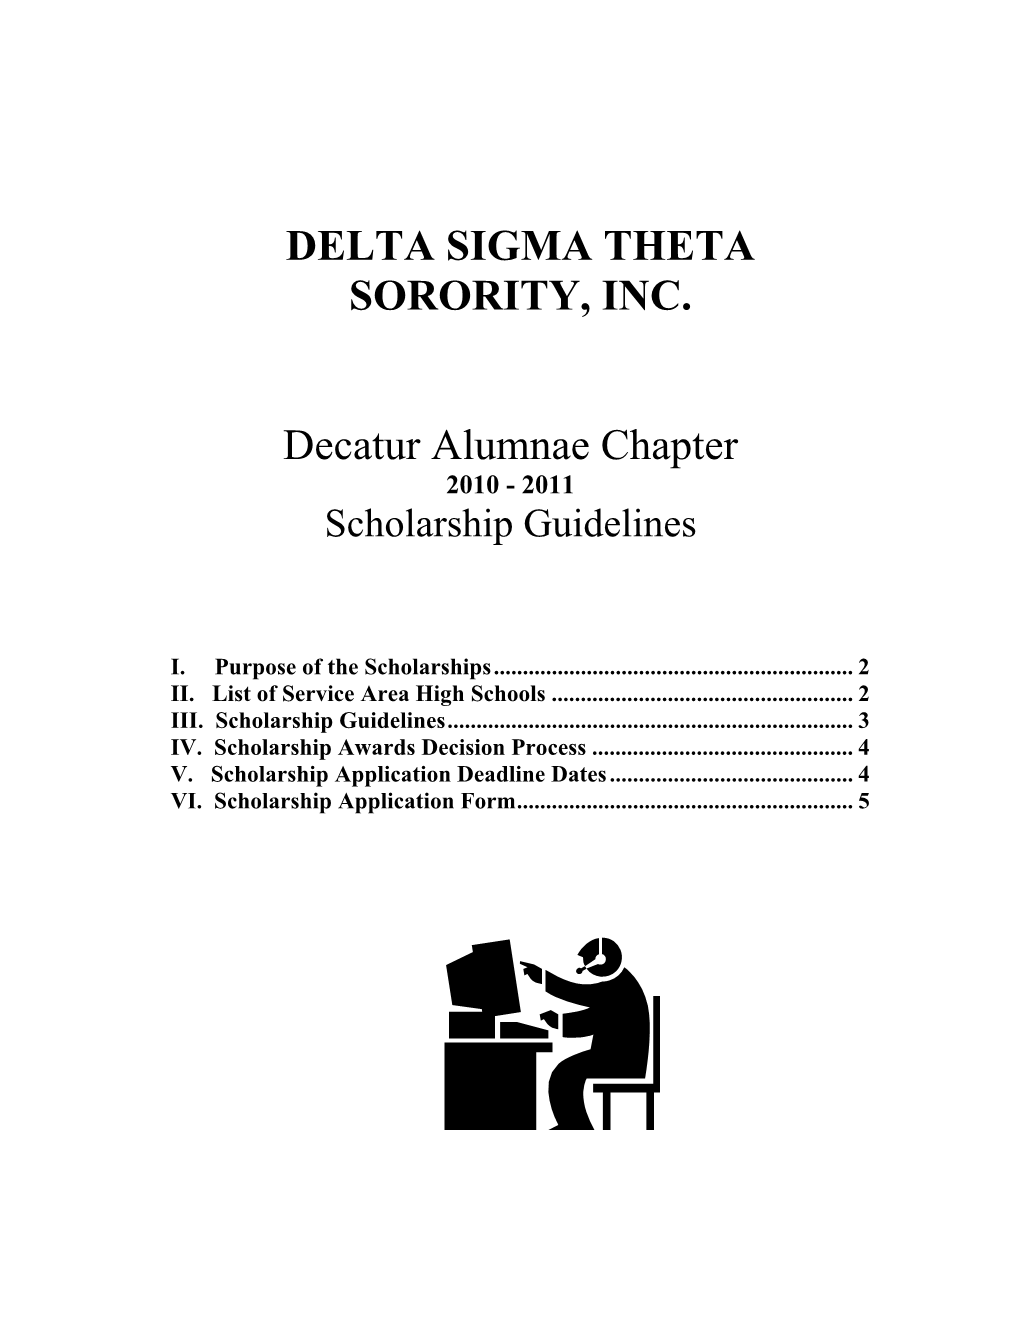 Delta Sigma Theta Sorority, Inc. Decatur Alumnae Chapter 2010-2011 Scholarship Application Form